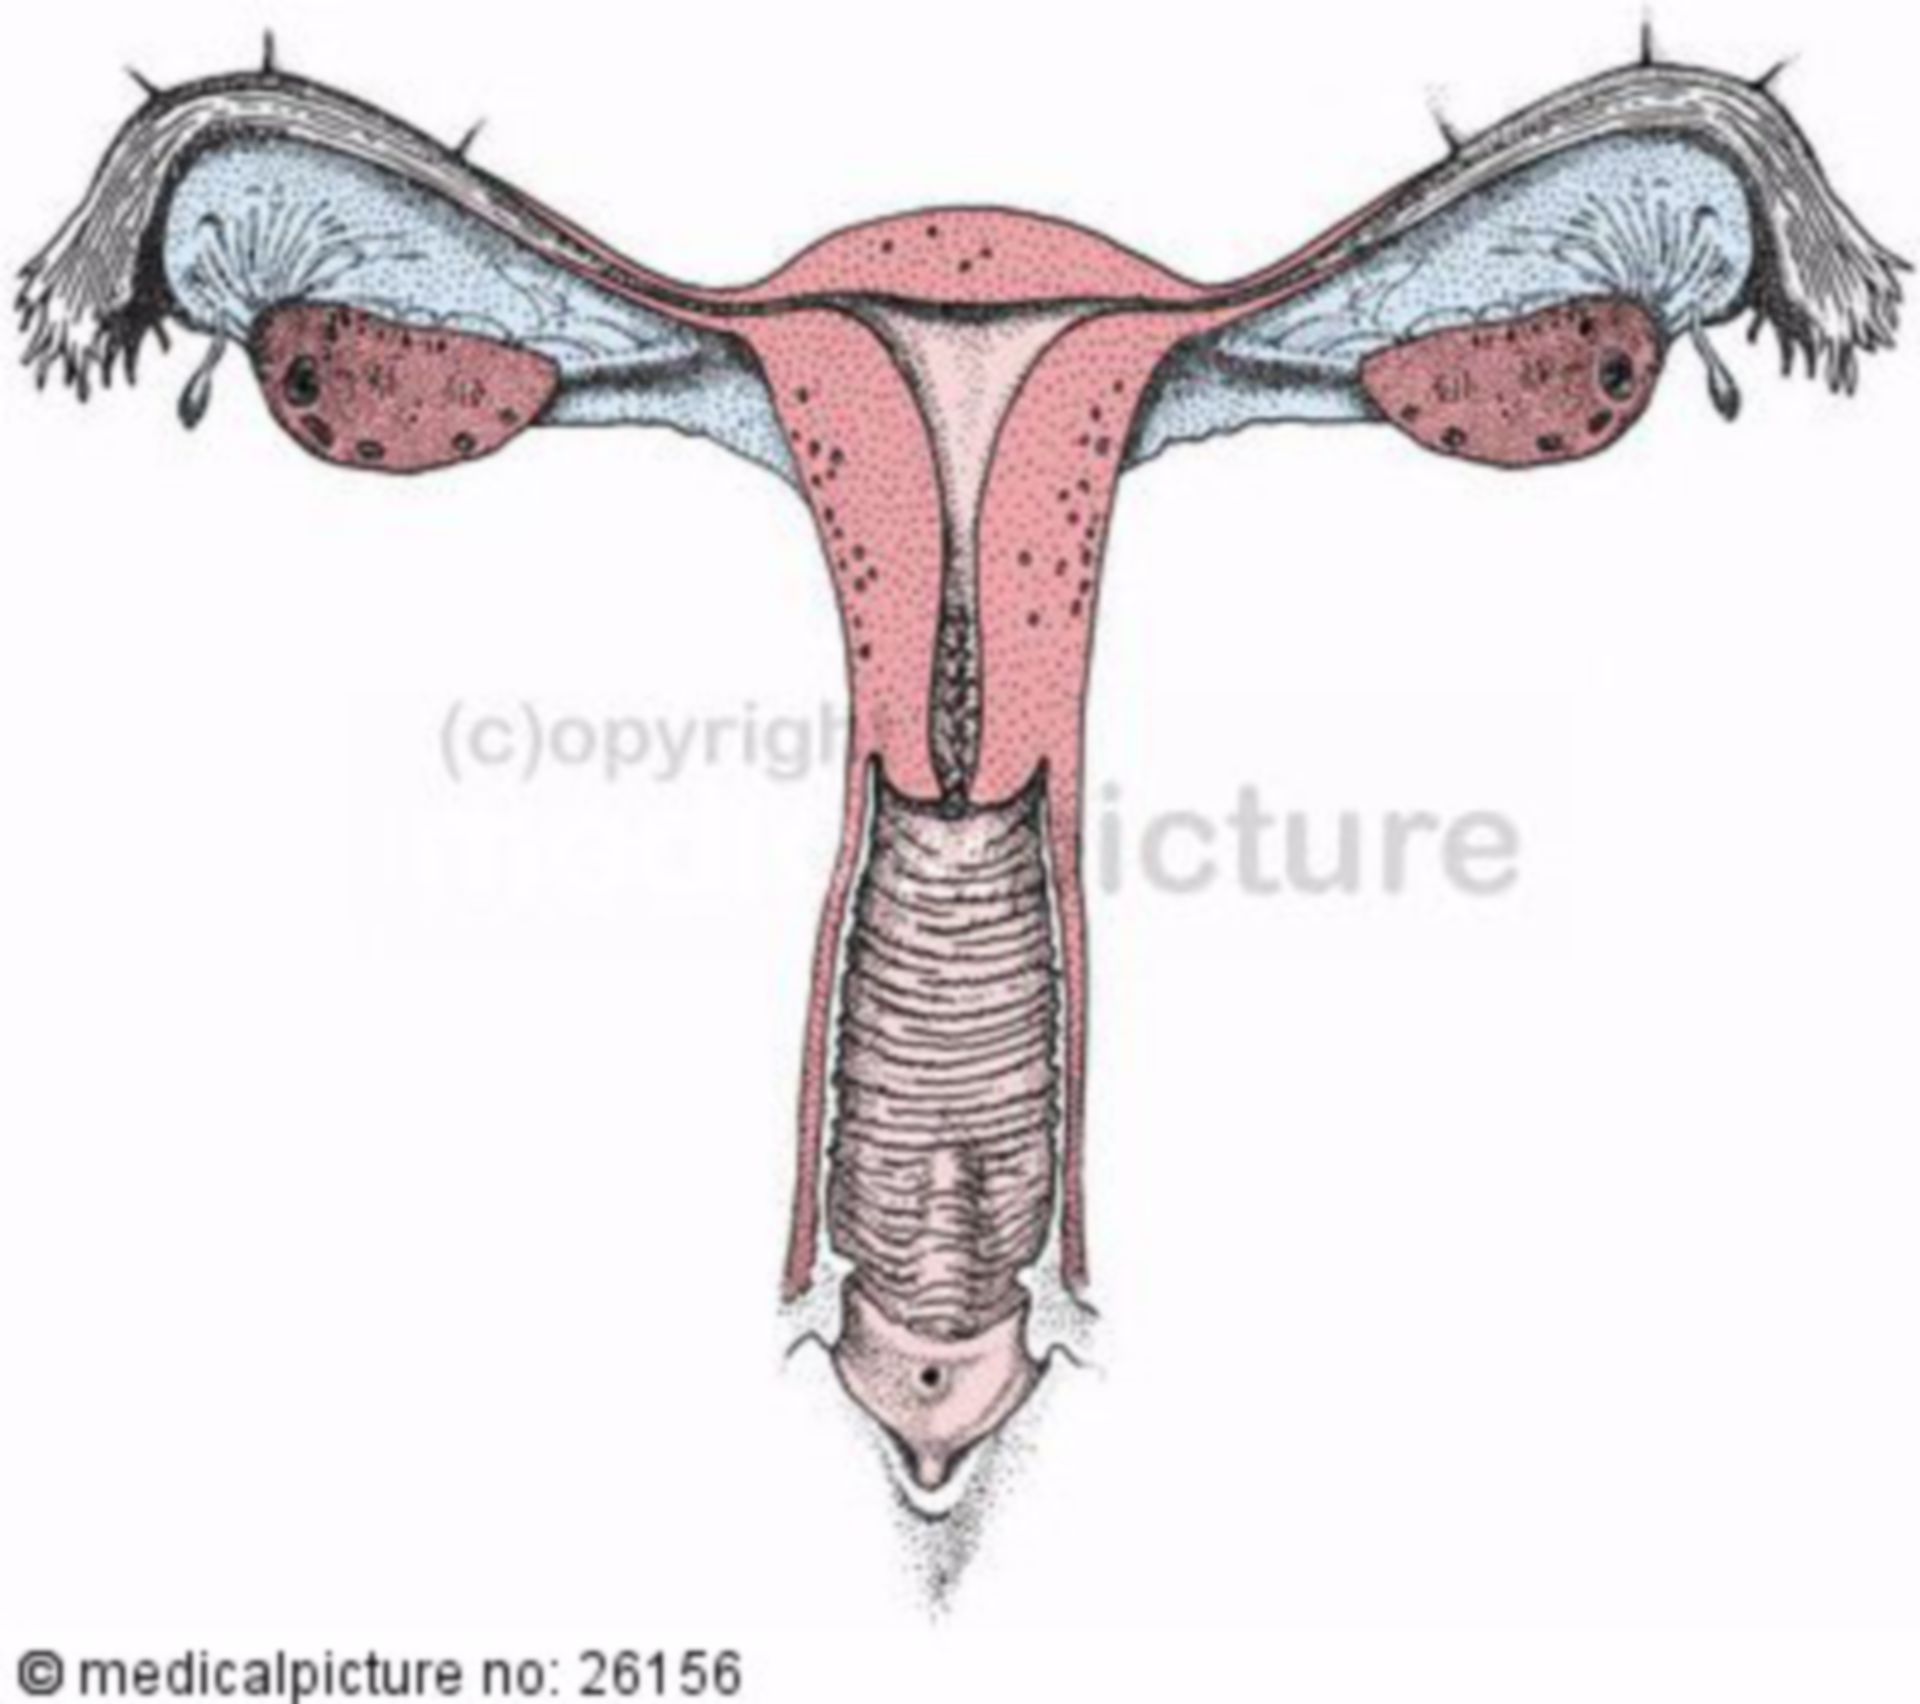 Female sexual organs